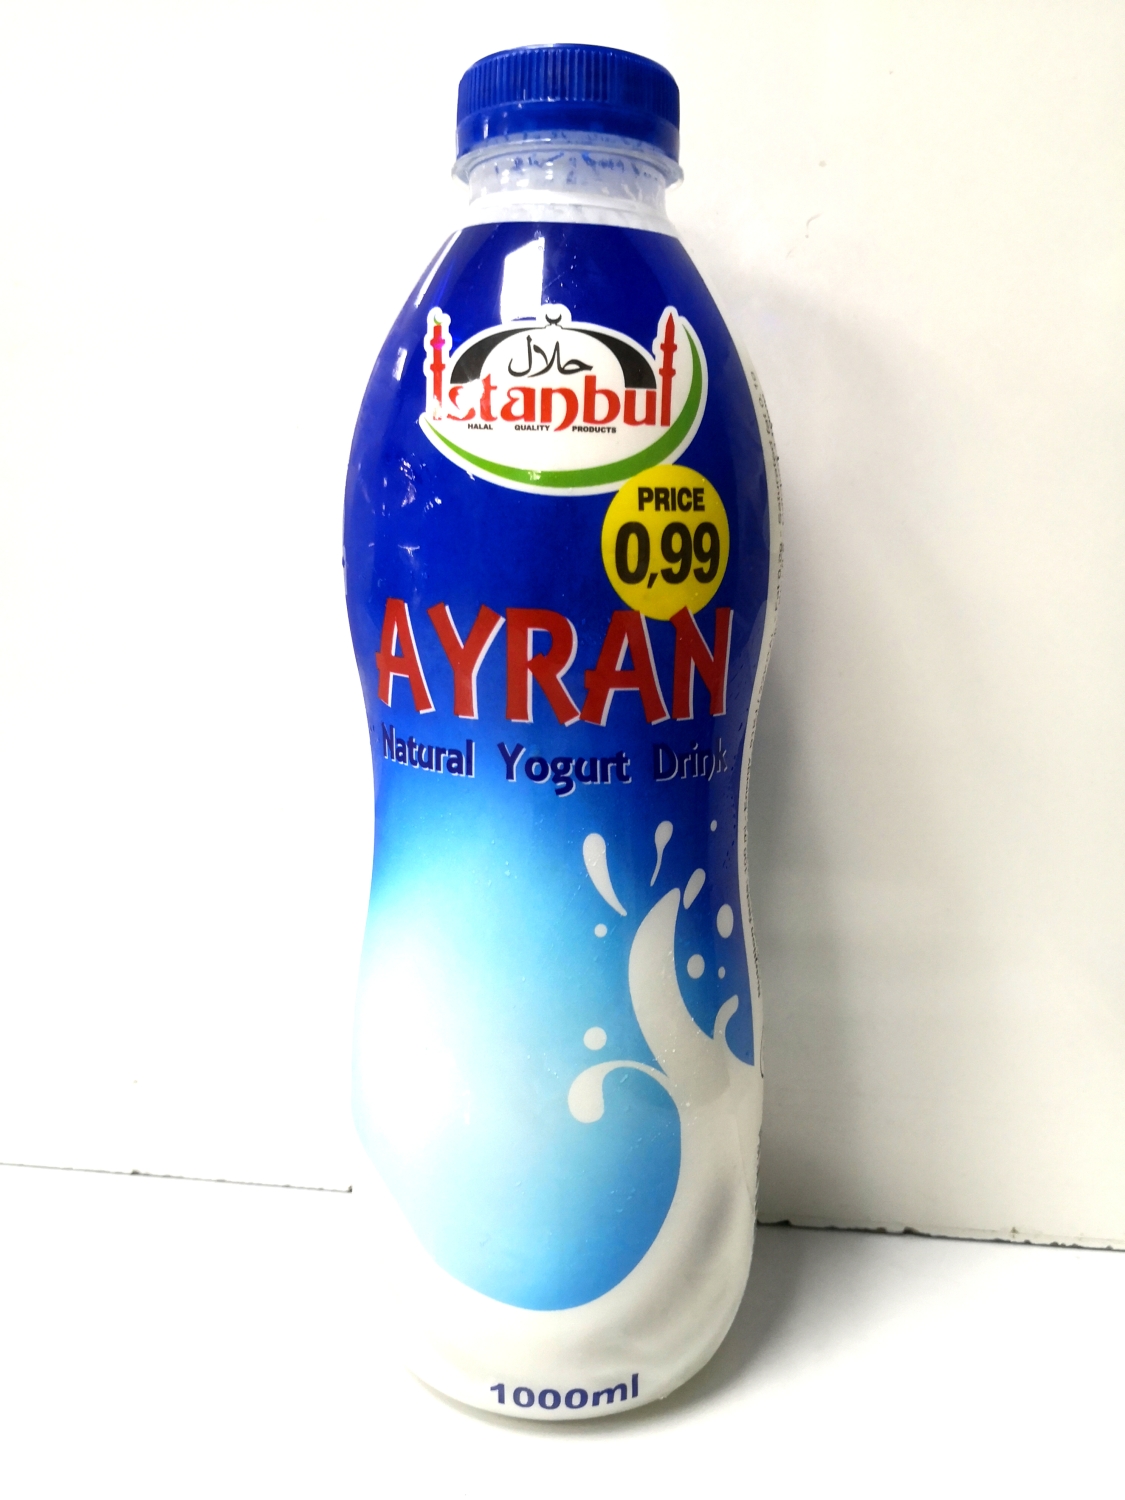 ISTANBUL AYRAN (YOGURT DRINK) BOTTLE 1LT - www.myspiceshop.co.uk